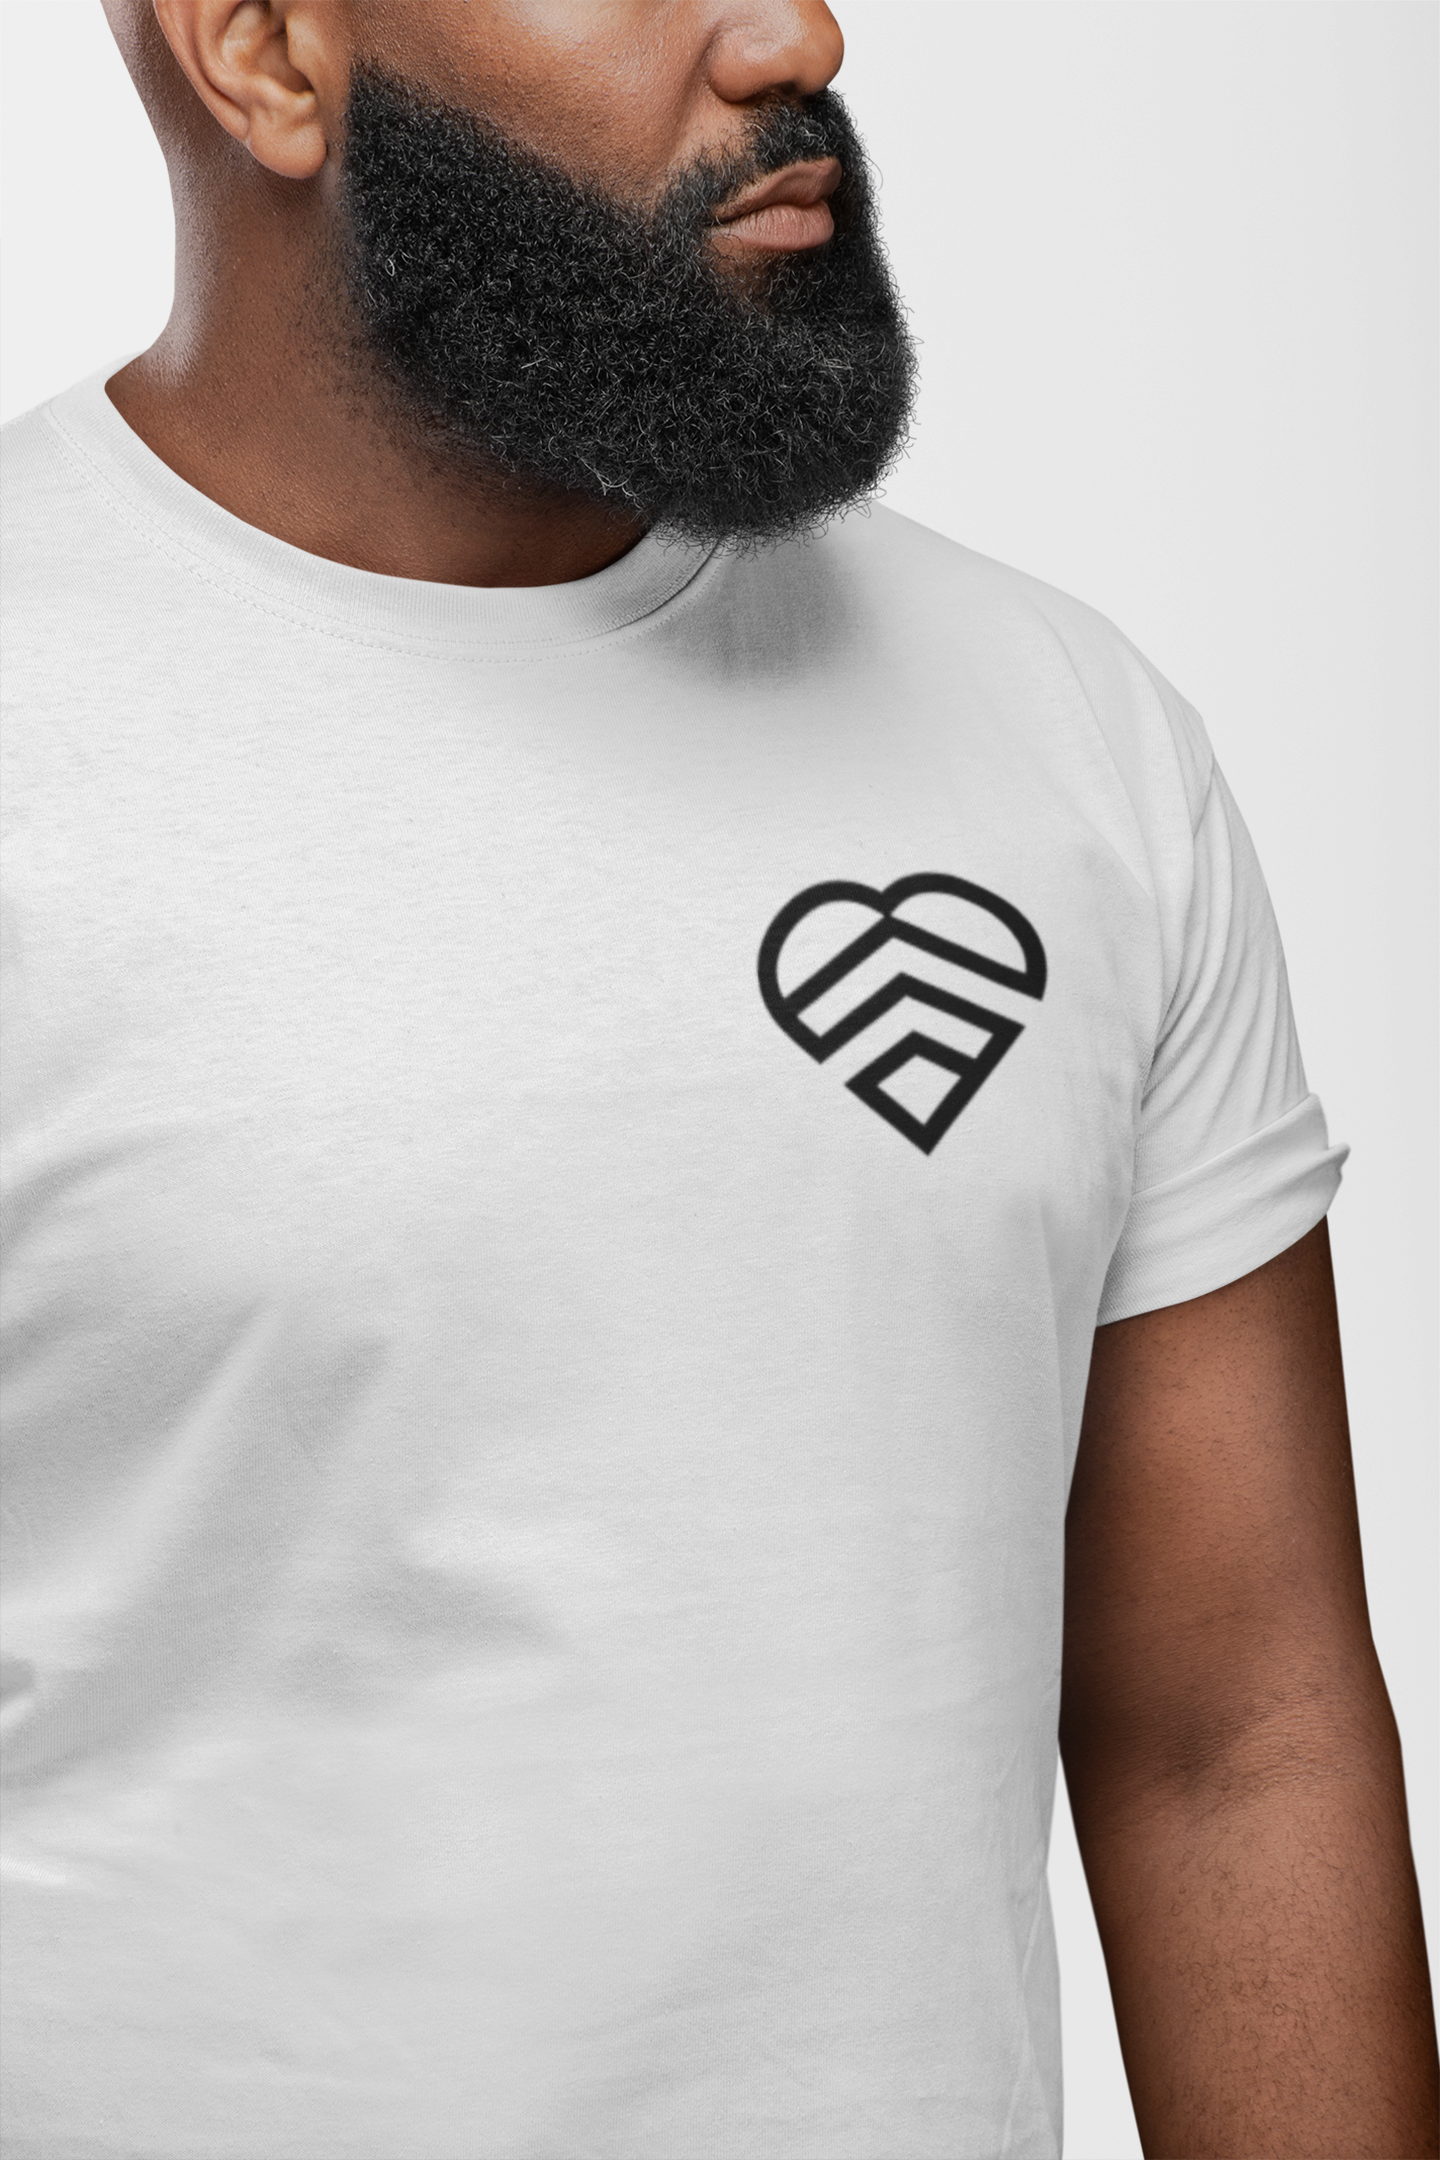 Mindset Club Logo Shirt - White & Black